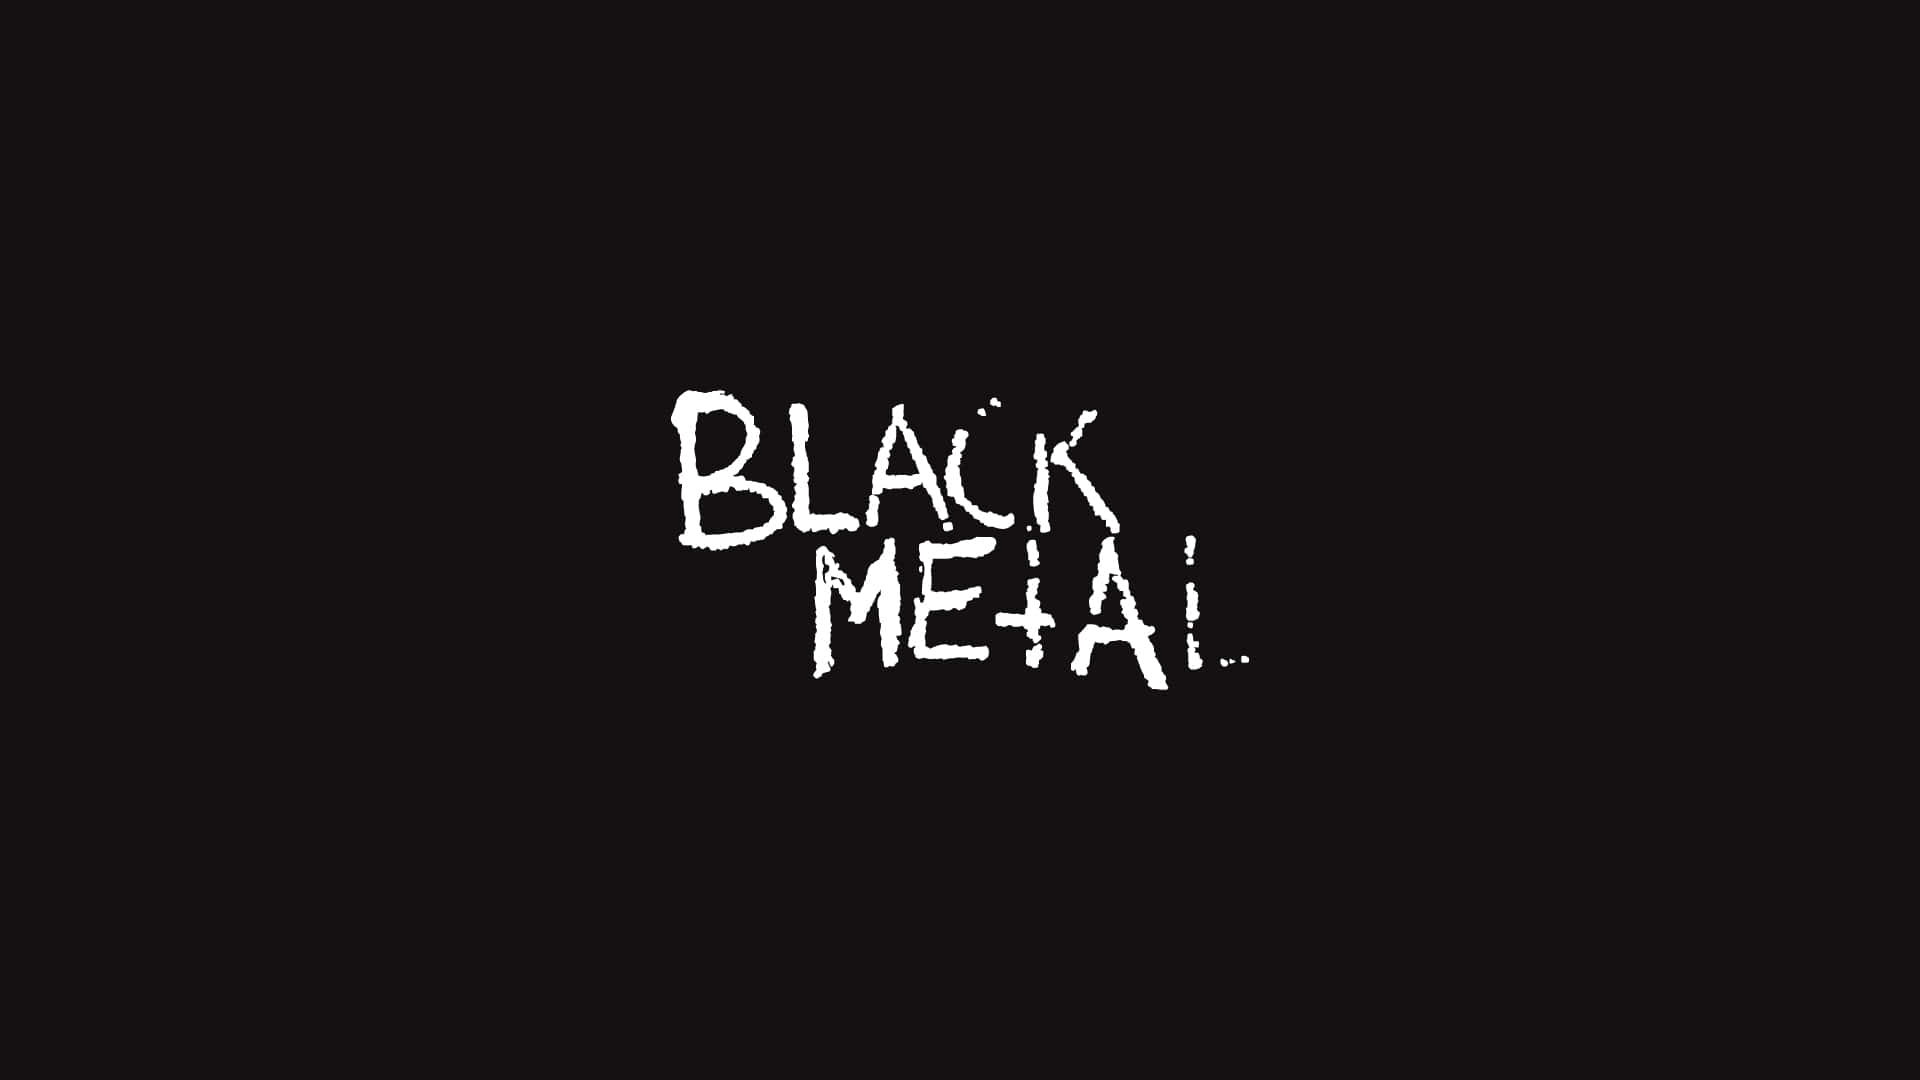 Black Metal Background 1920 X 1080